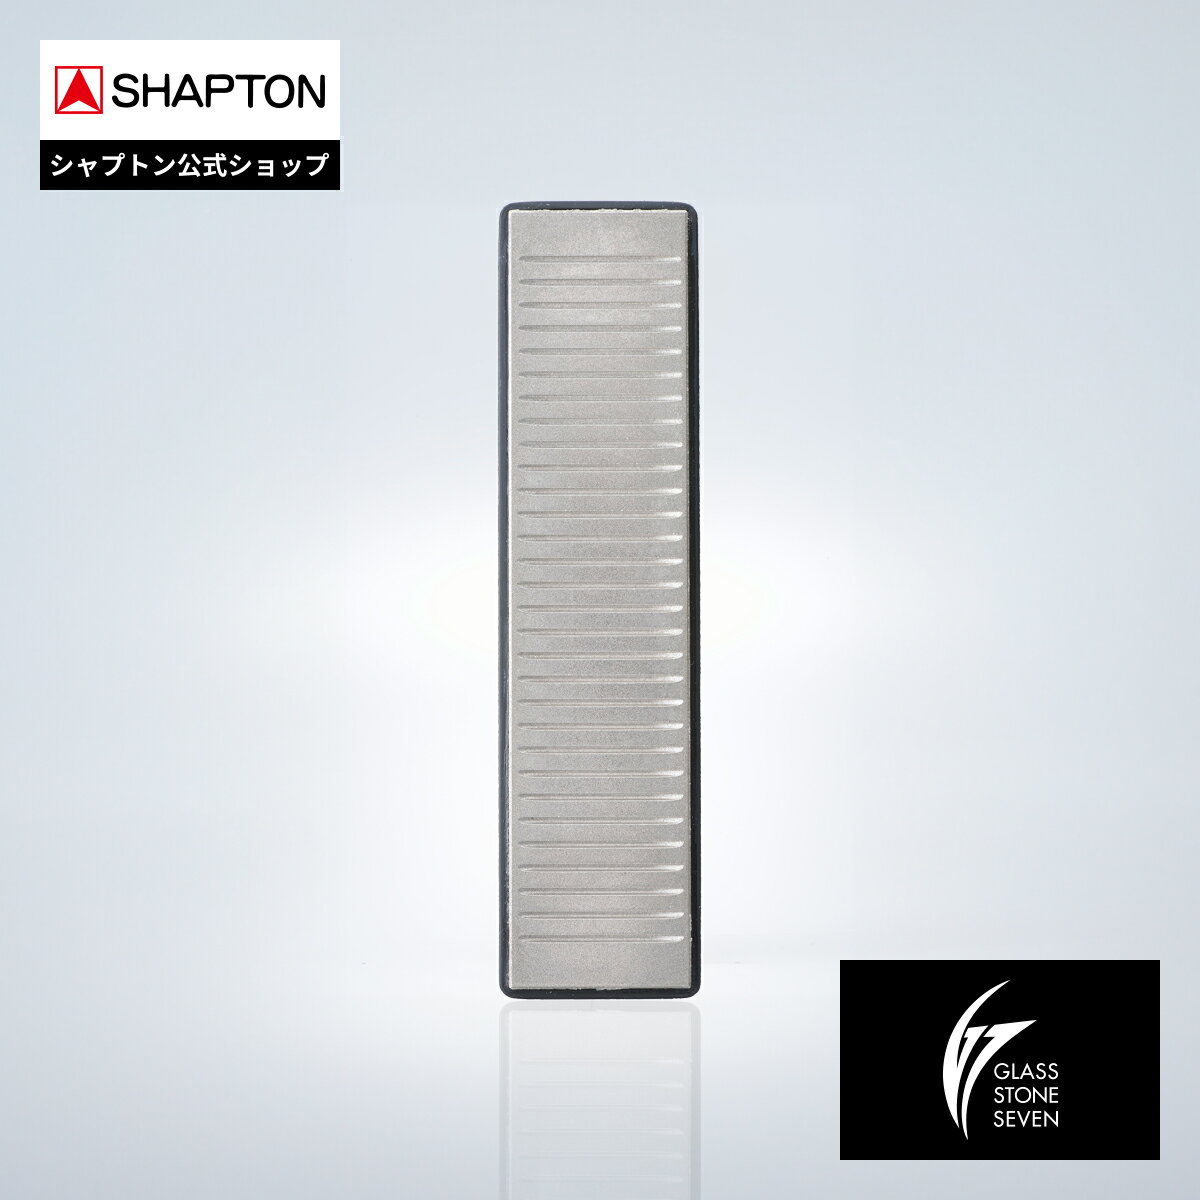 SHAPTON Glass Stone Seven Lapping plate 70100 単品 砥石用 シャプトン ダイヤモンド修正器 G7 165x41x16mm 送料無料